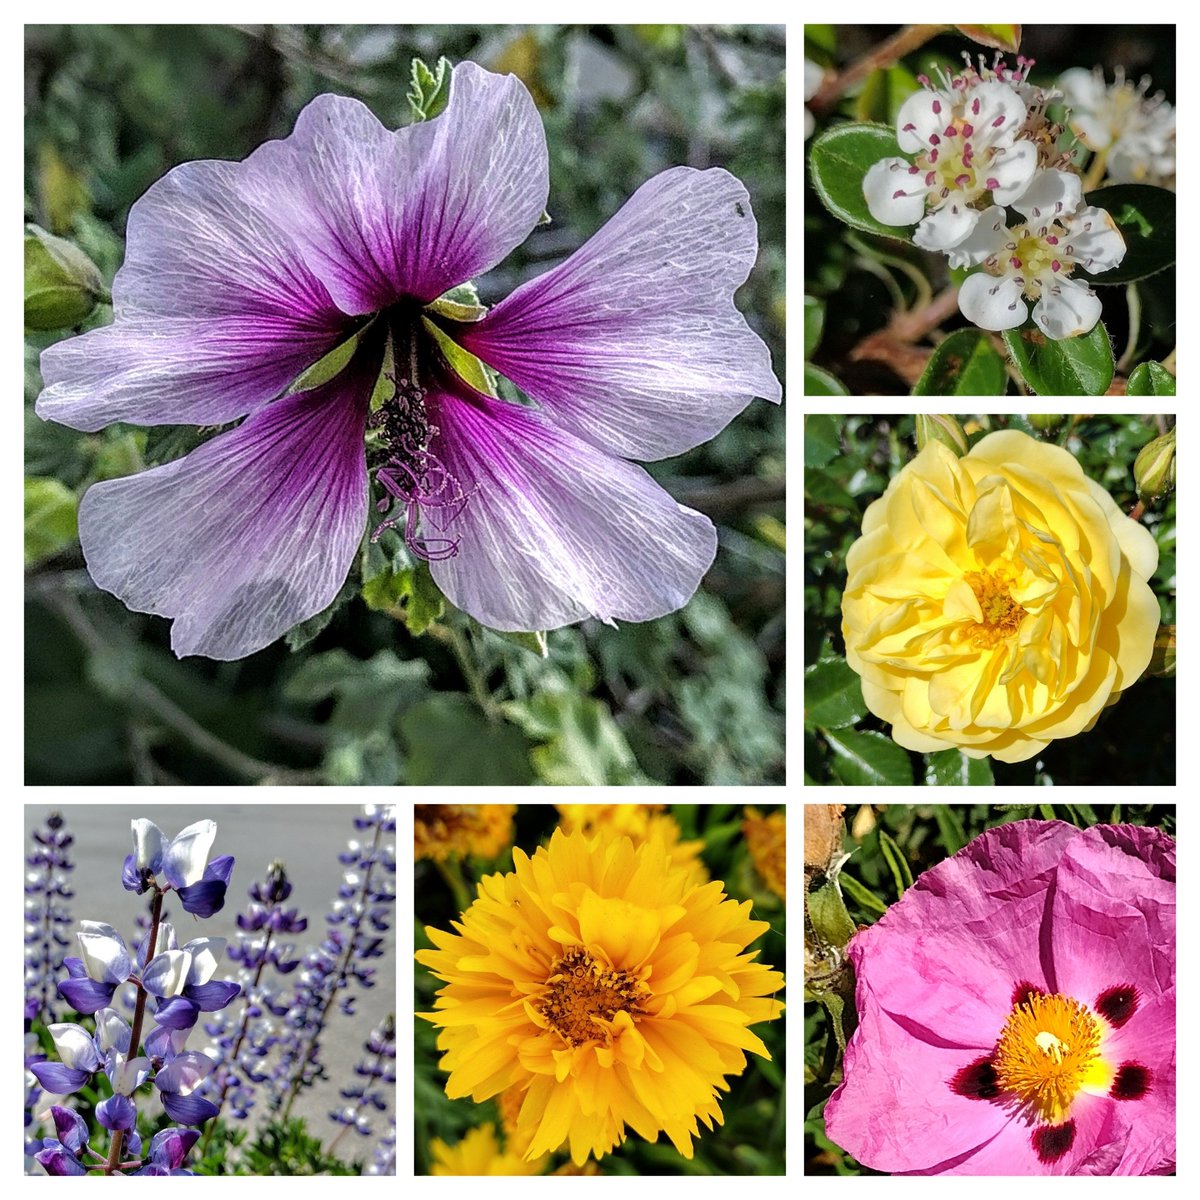 #SixOnSaturday 
#FlowerReport:

From San Jose and Gilroy, California this week.